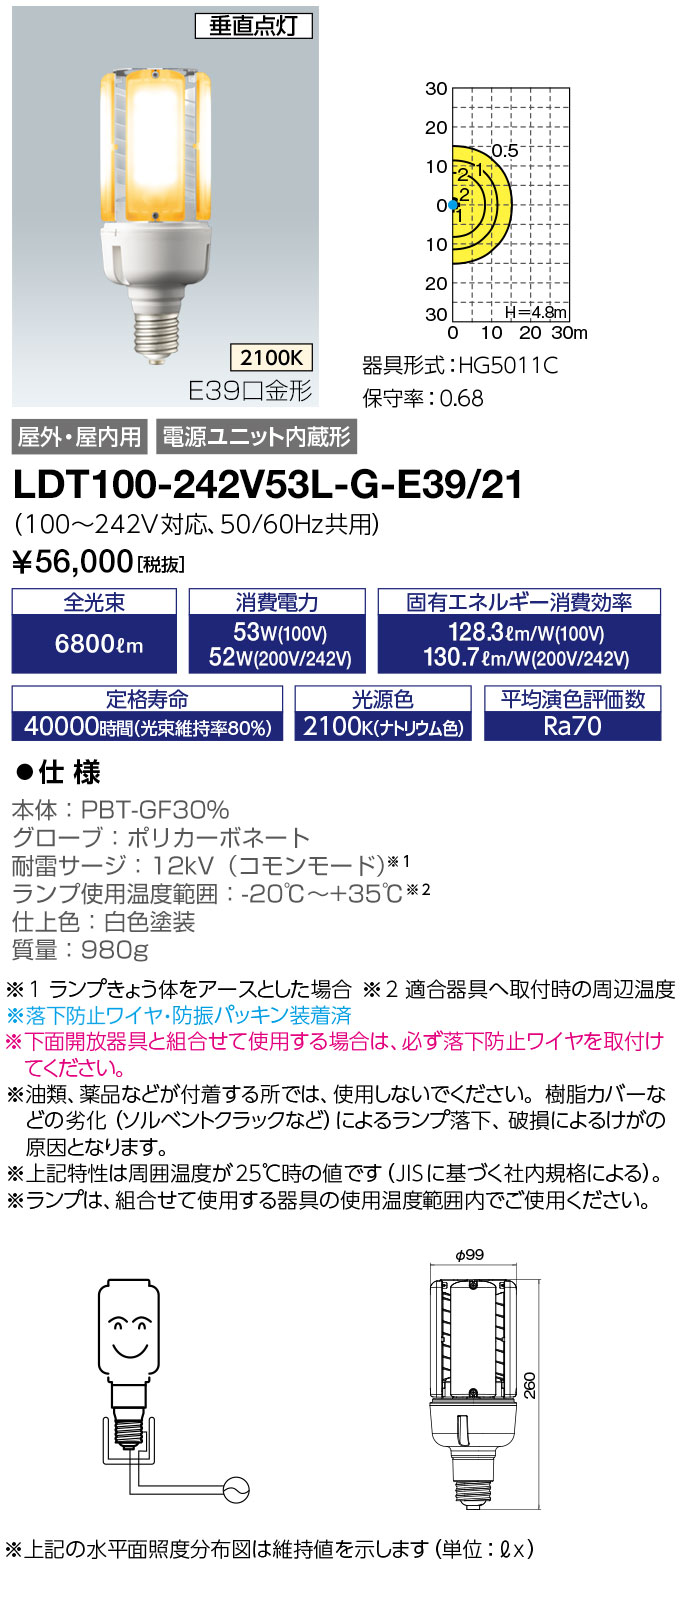 LDT100-242V53L-G-E39 レディオック LEDライトバルブK 電源内蔵 水銀